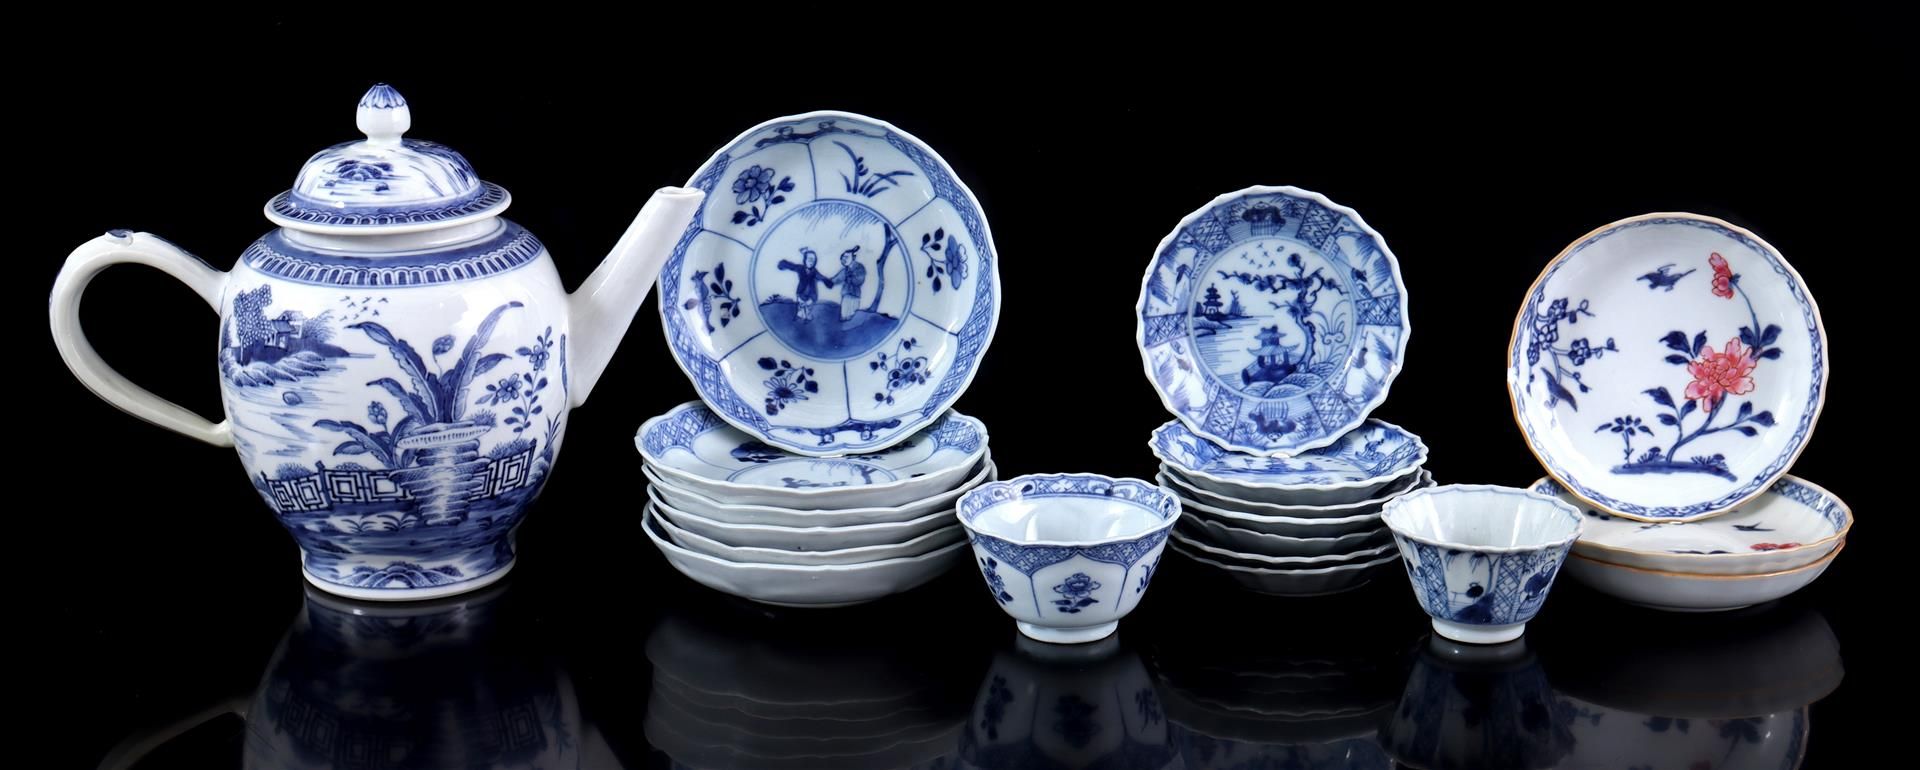 Porcelain tea set with blue and white decor